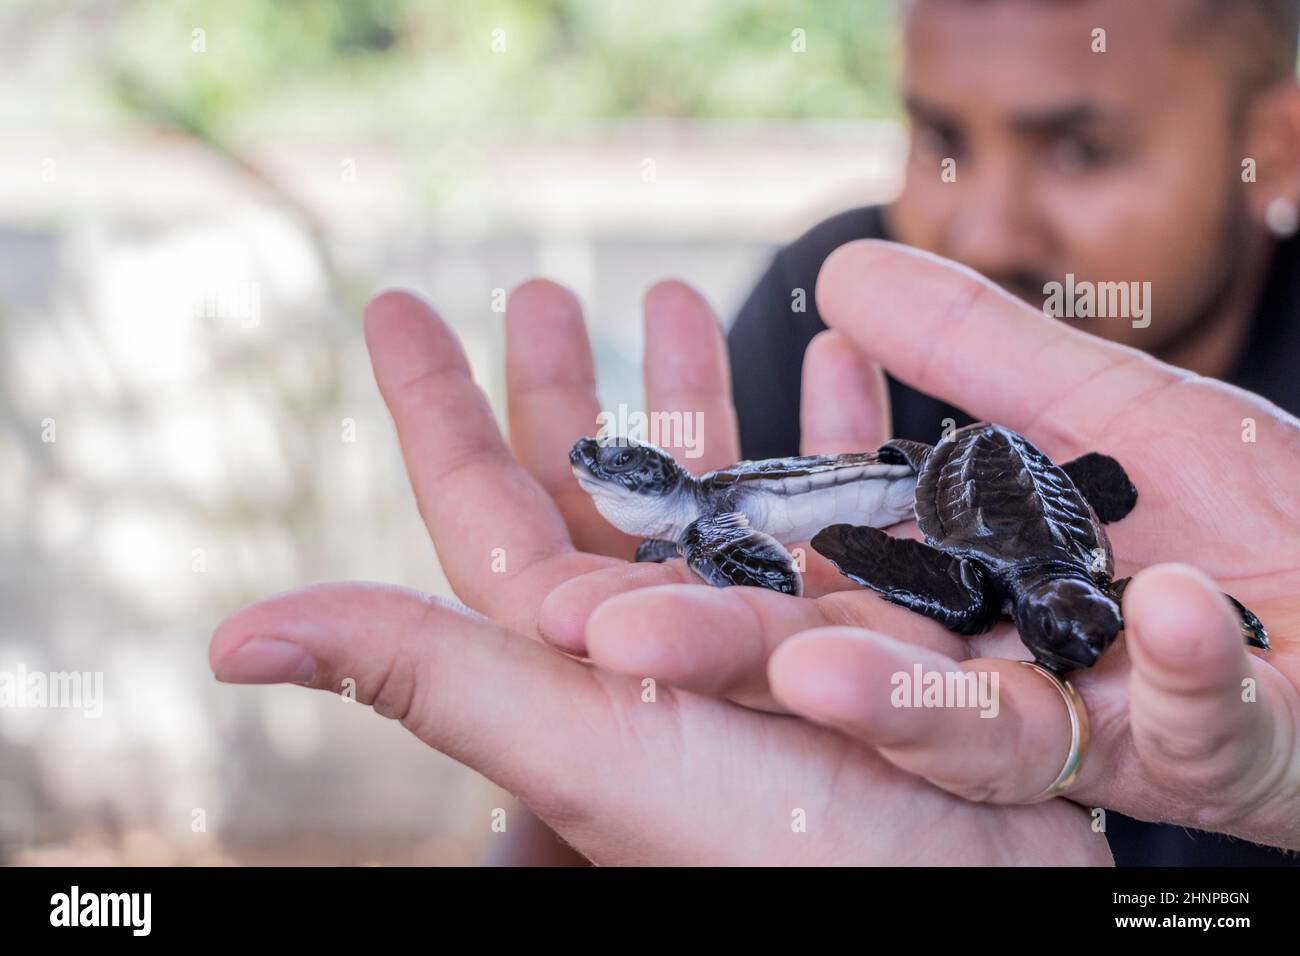 Black baby turtle on hands. Stock Photo